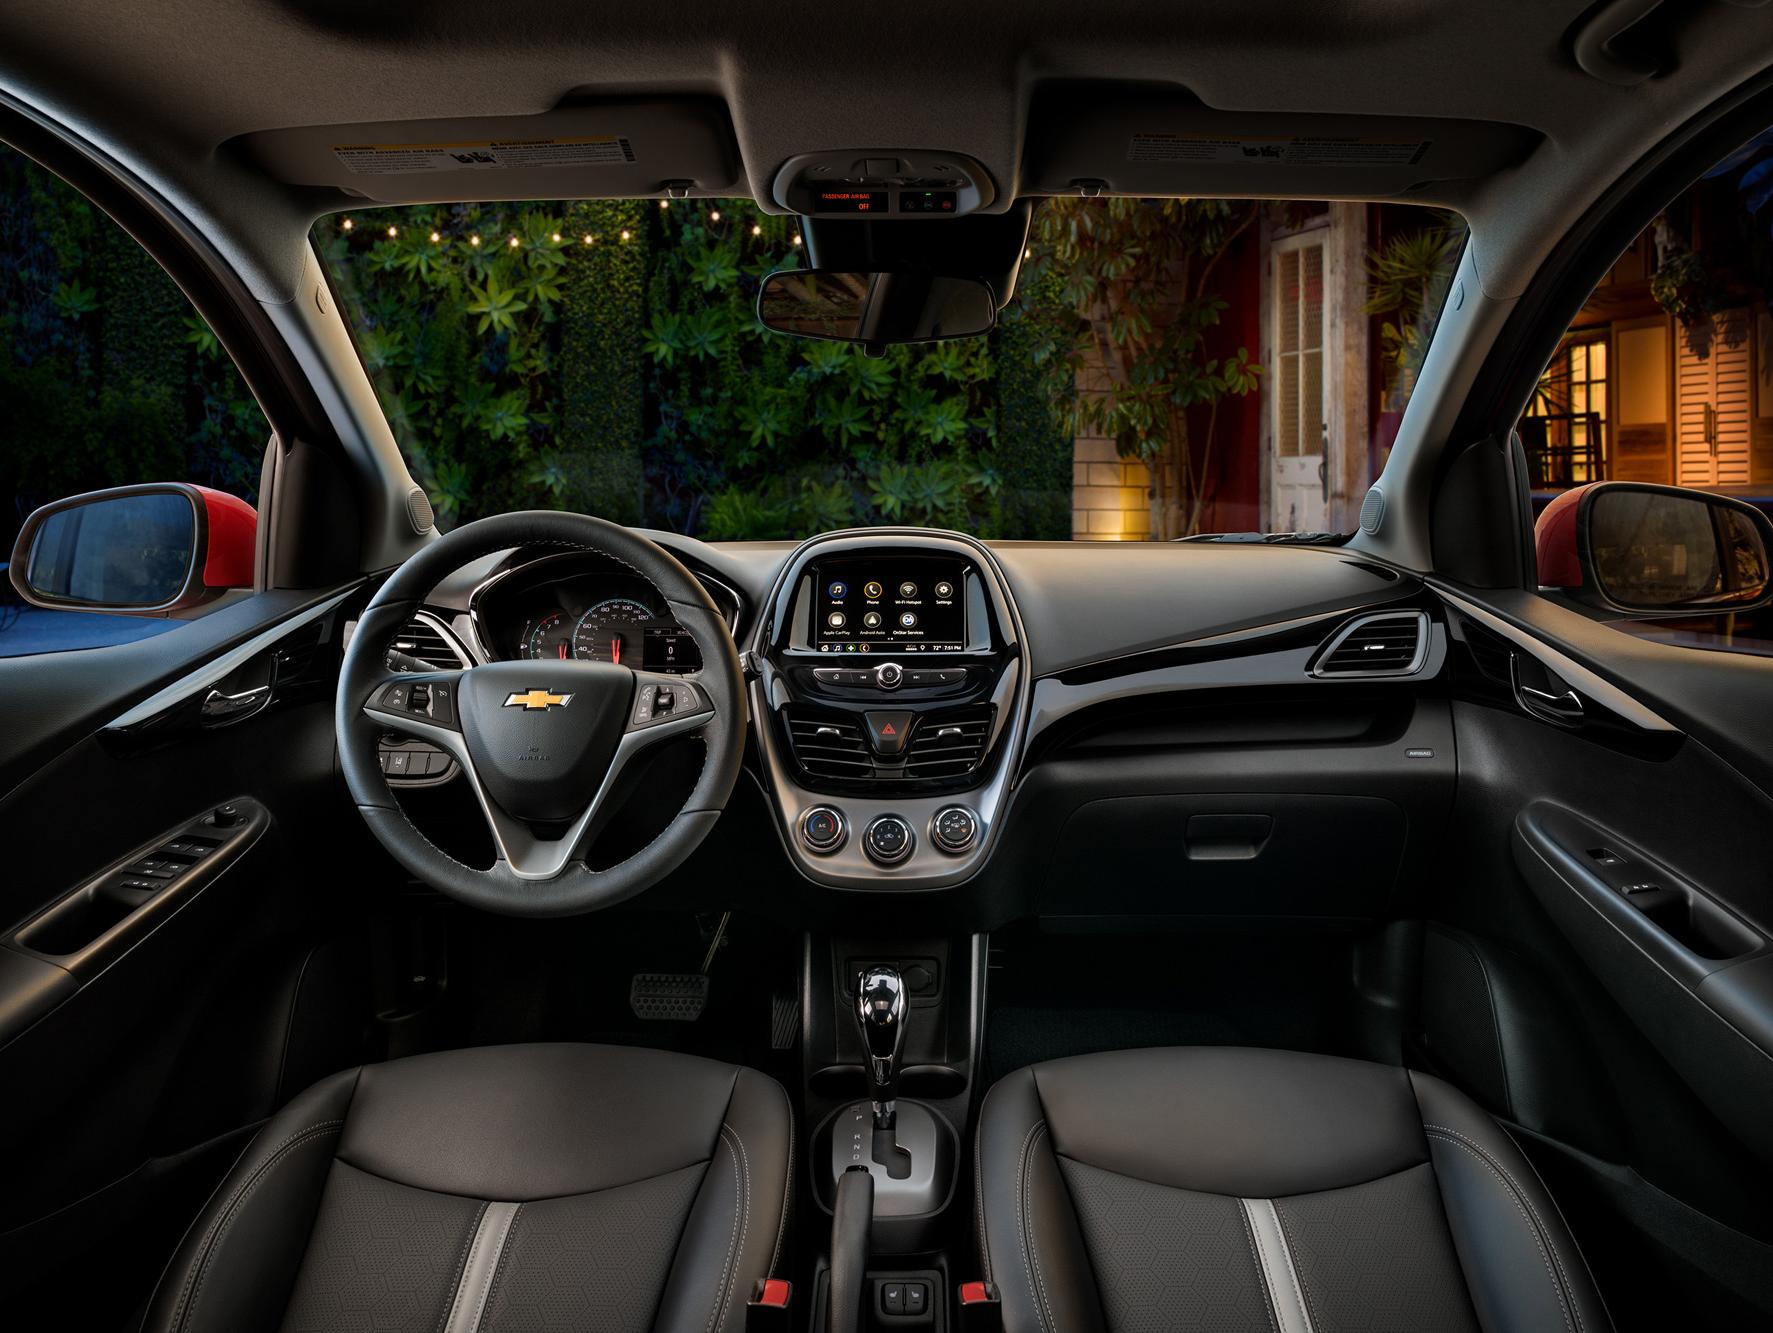 2019 Chevrolet Spark Interior | Lifestyle 